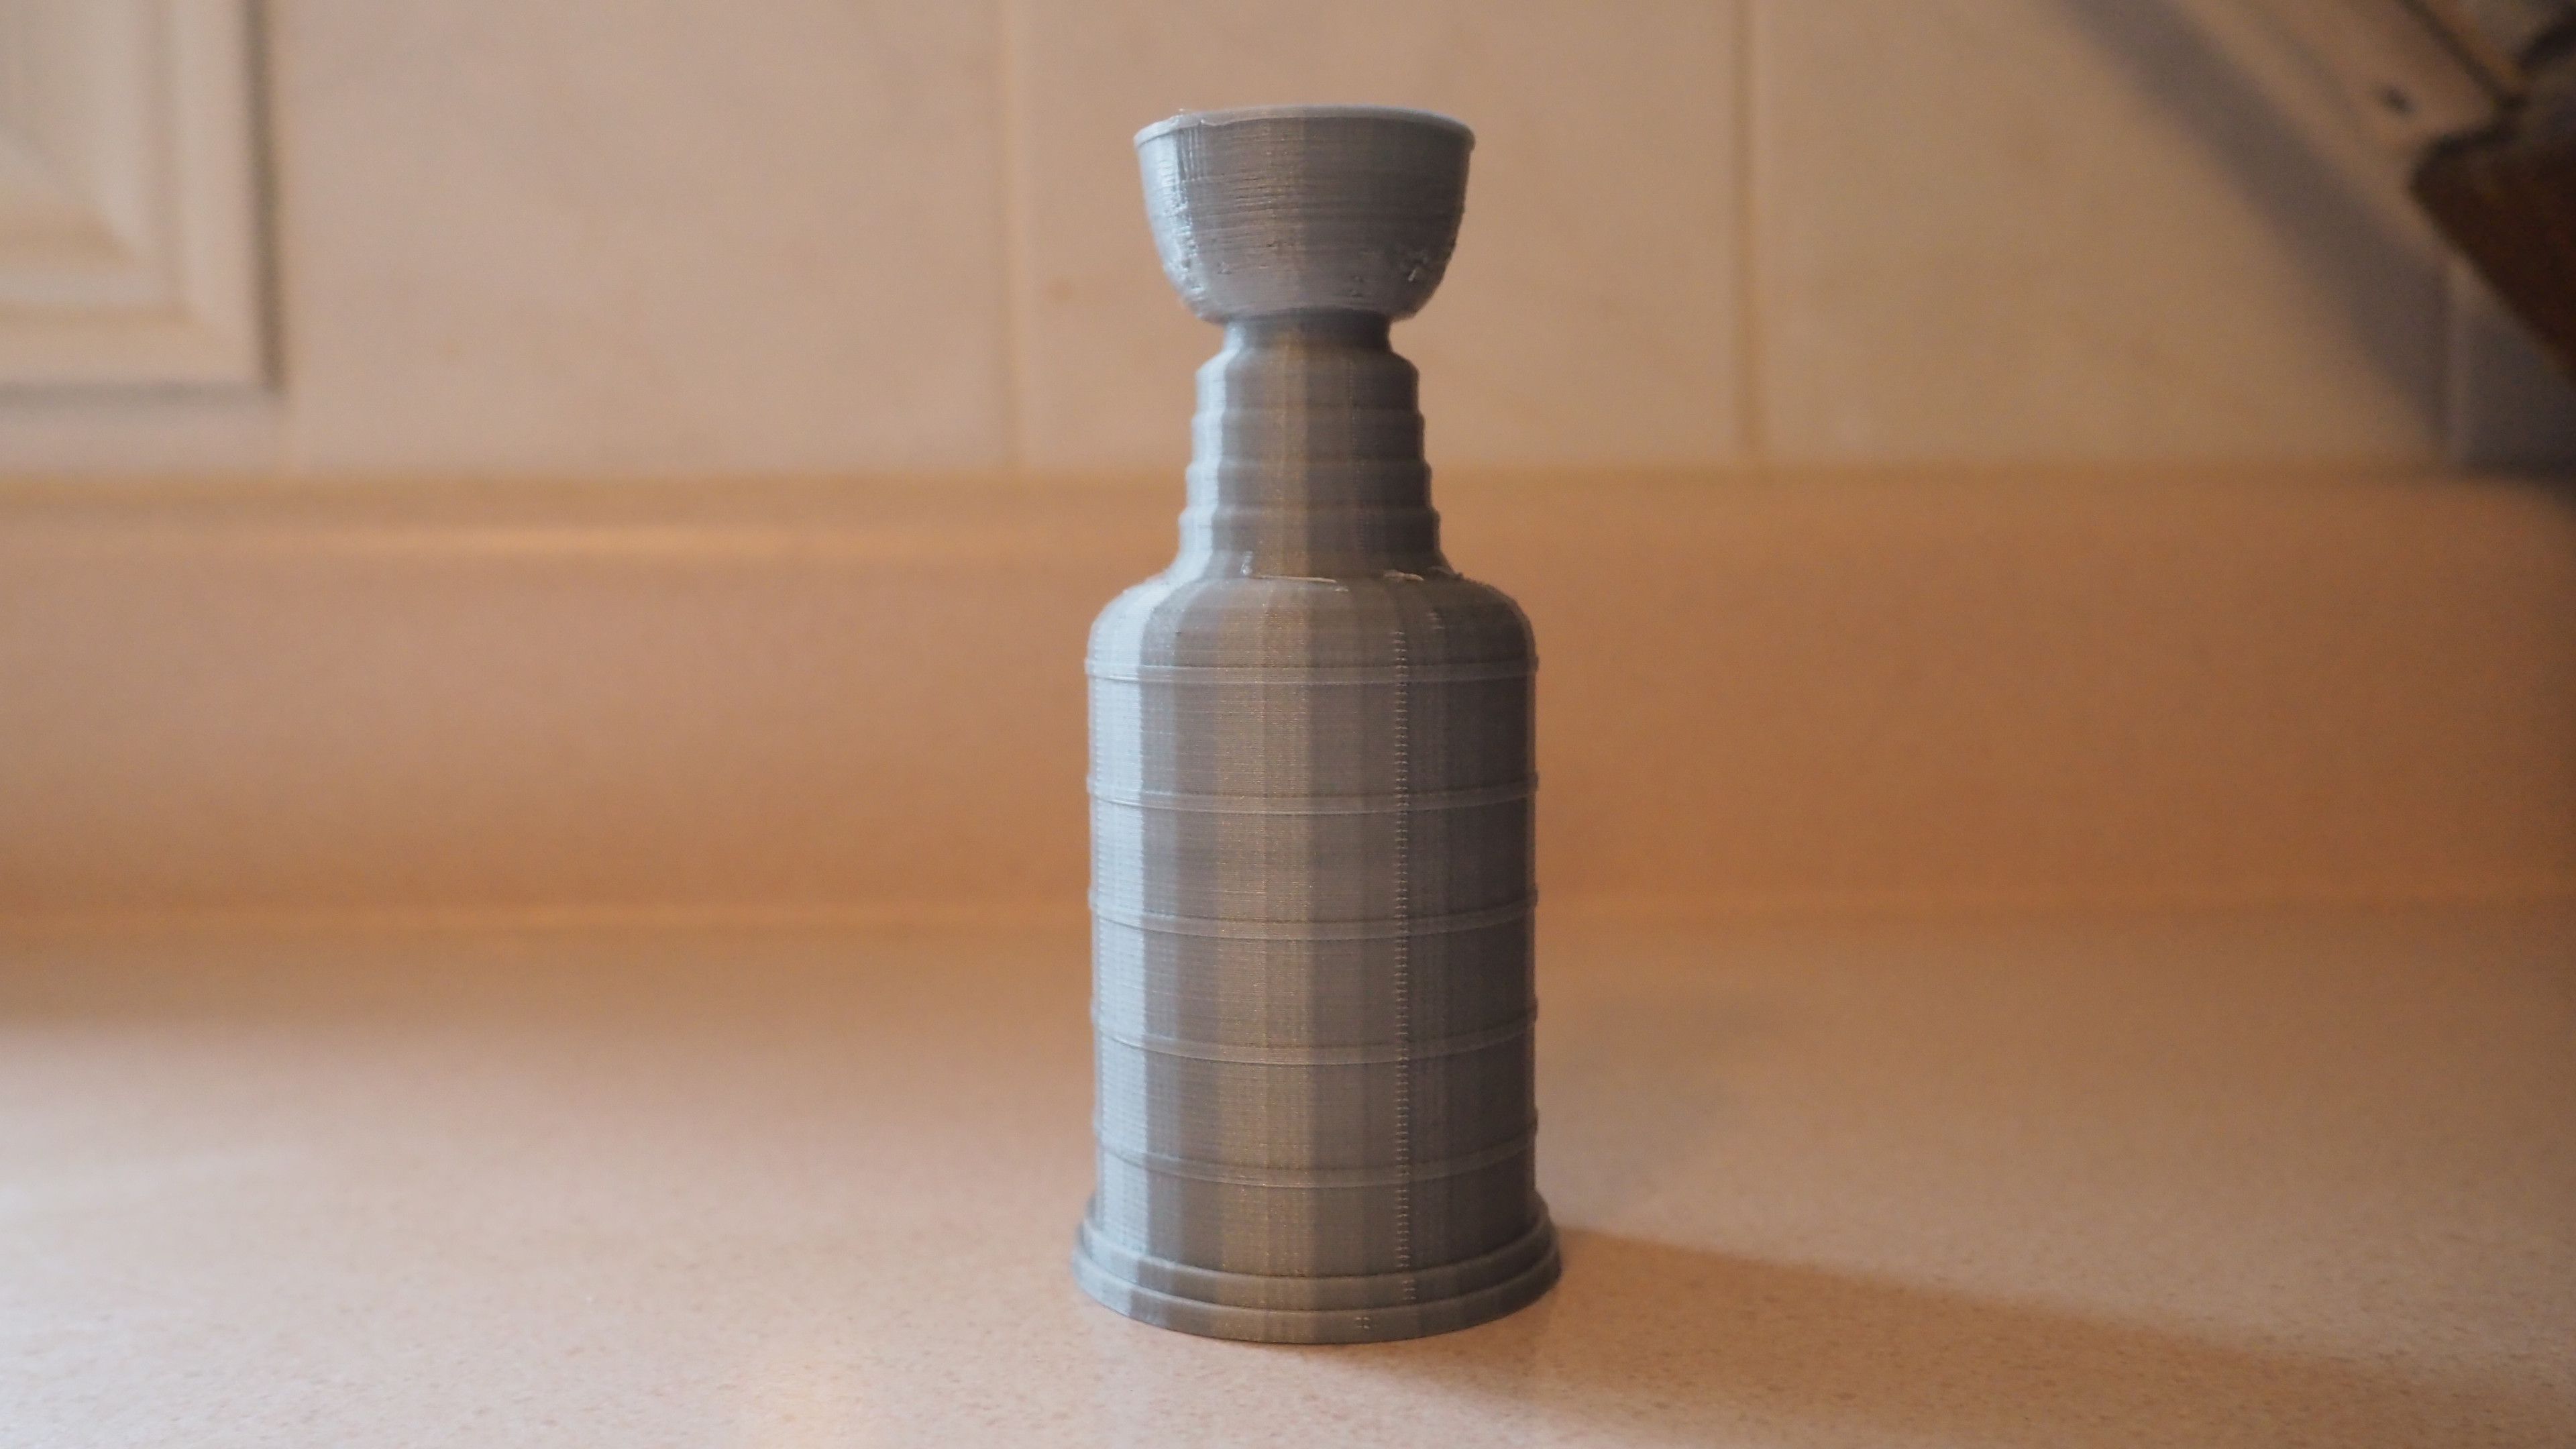 Stanley Cup 3D printed